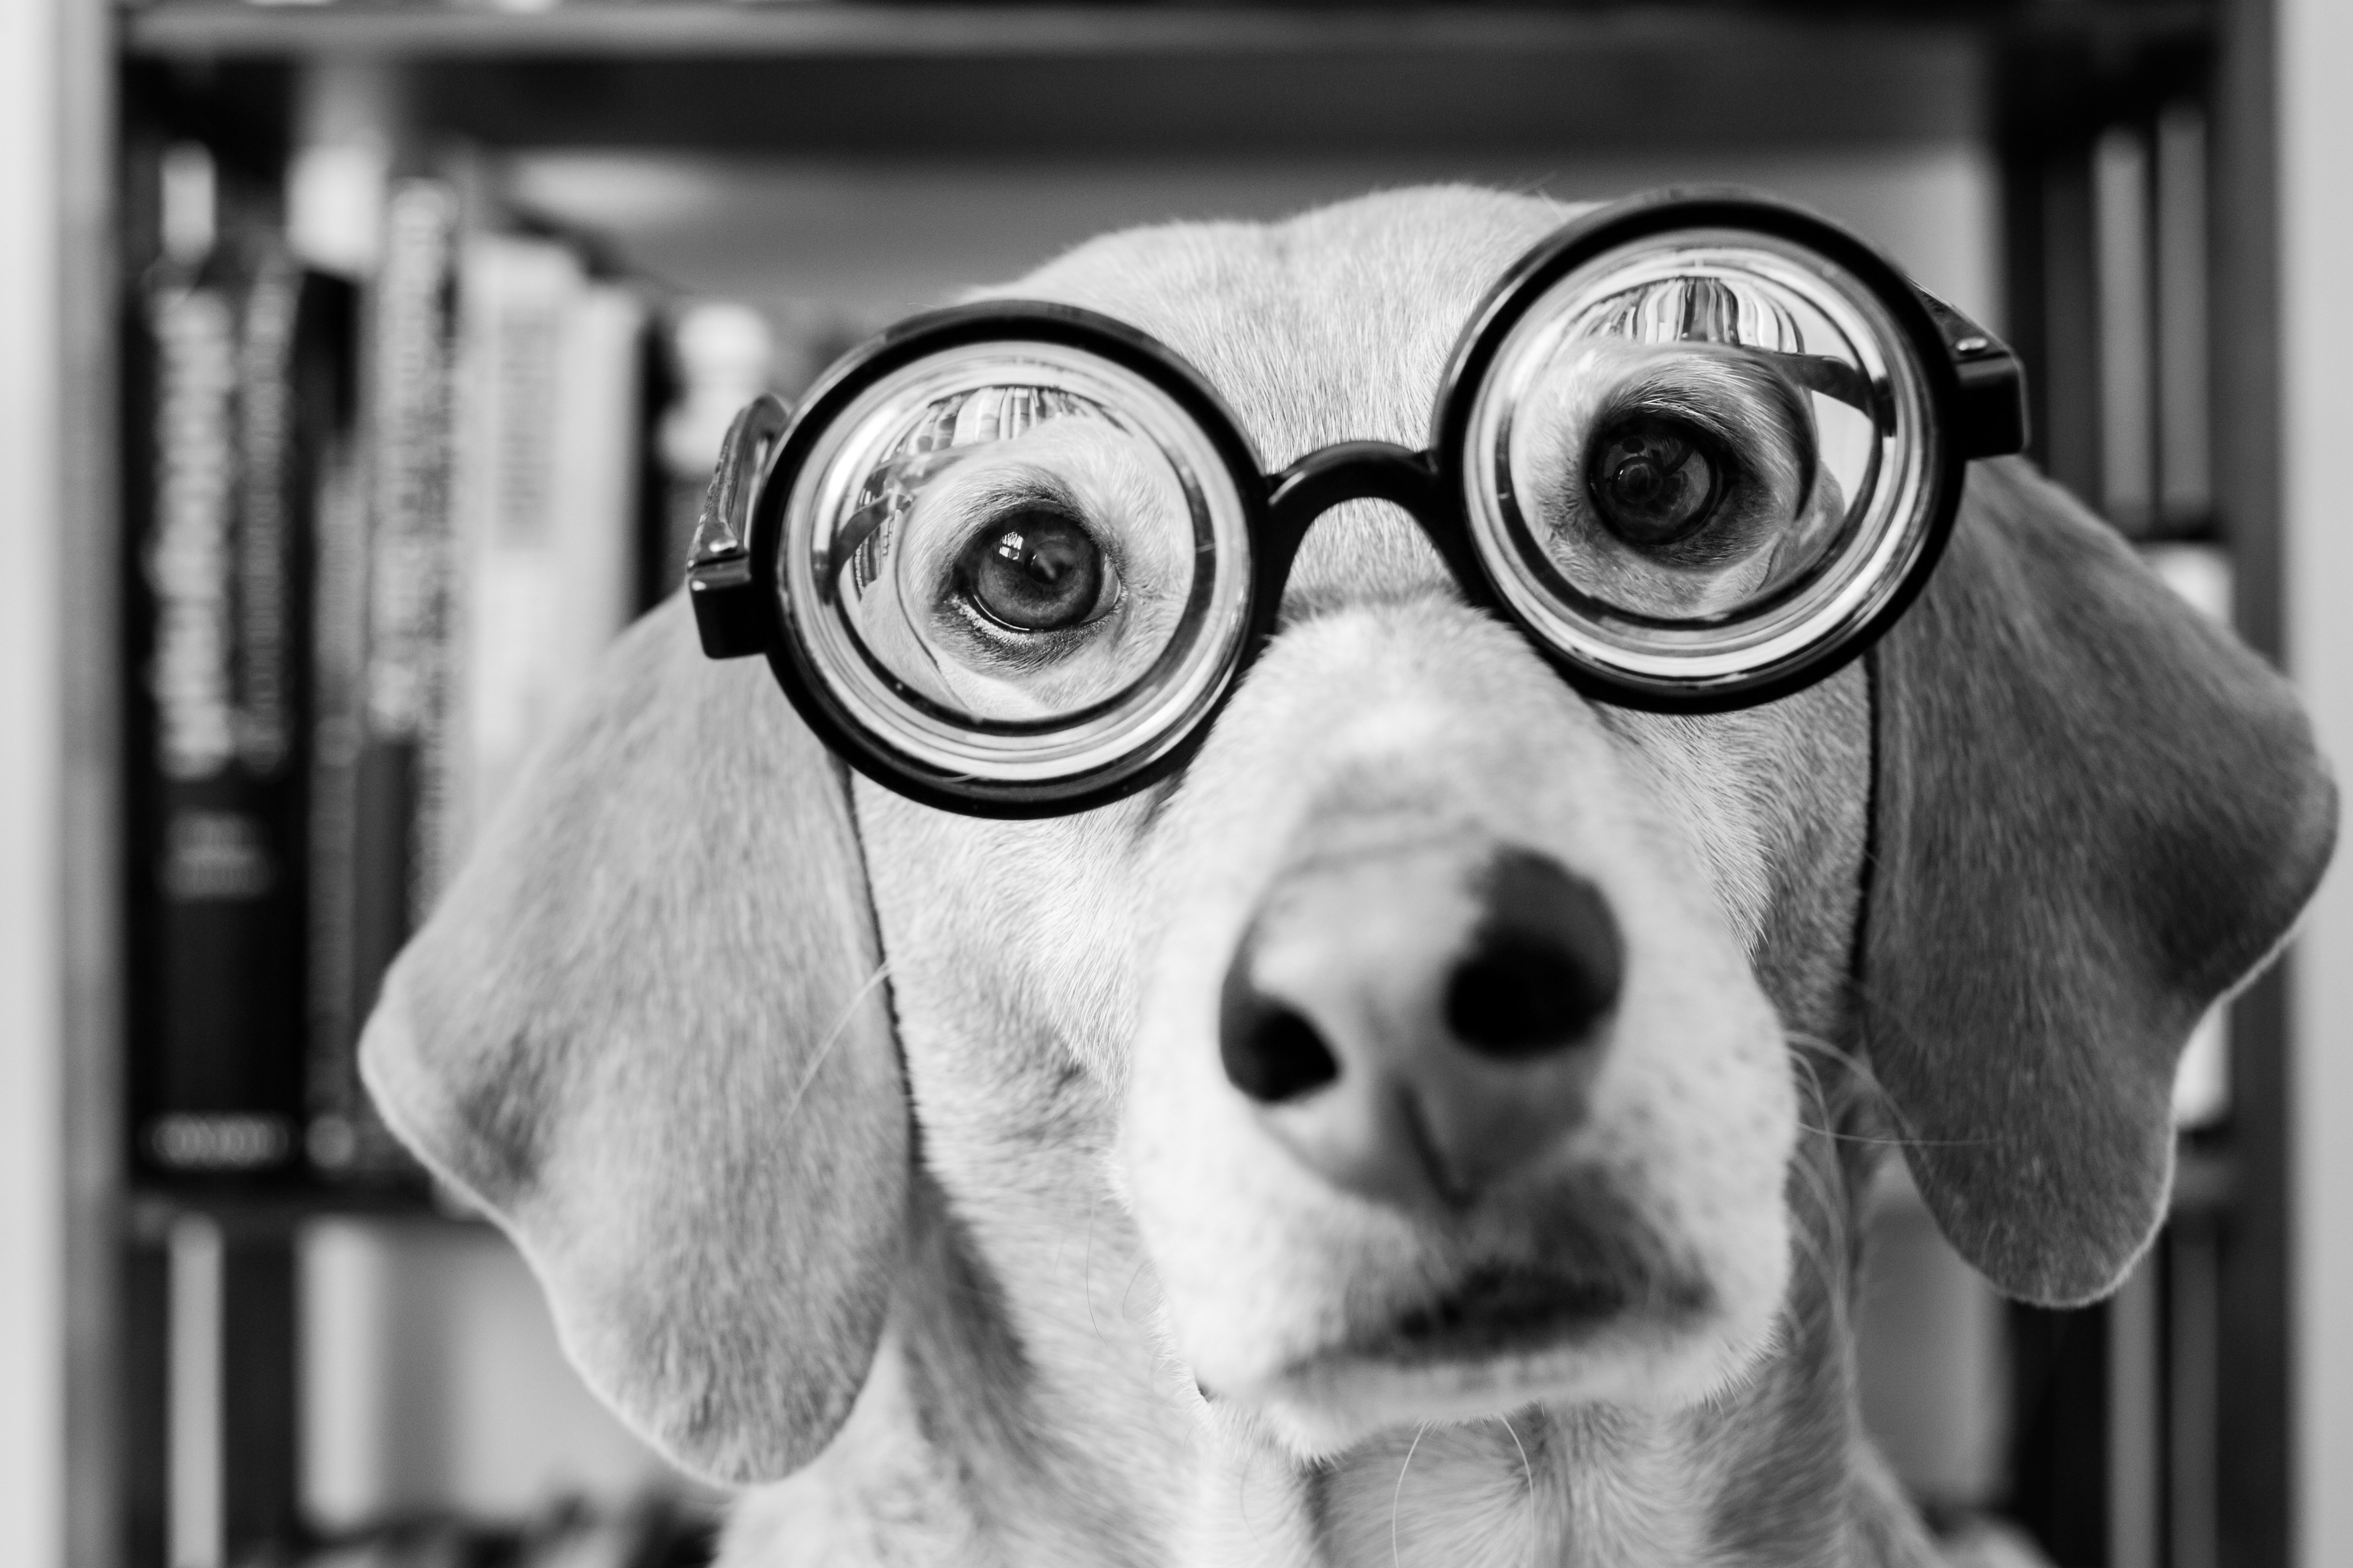 Dog wearing nerd glasses